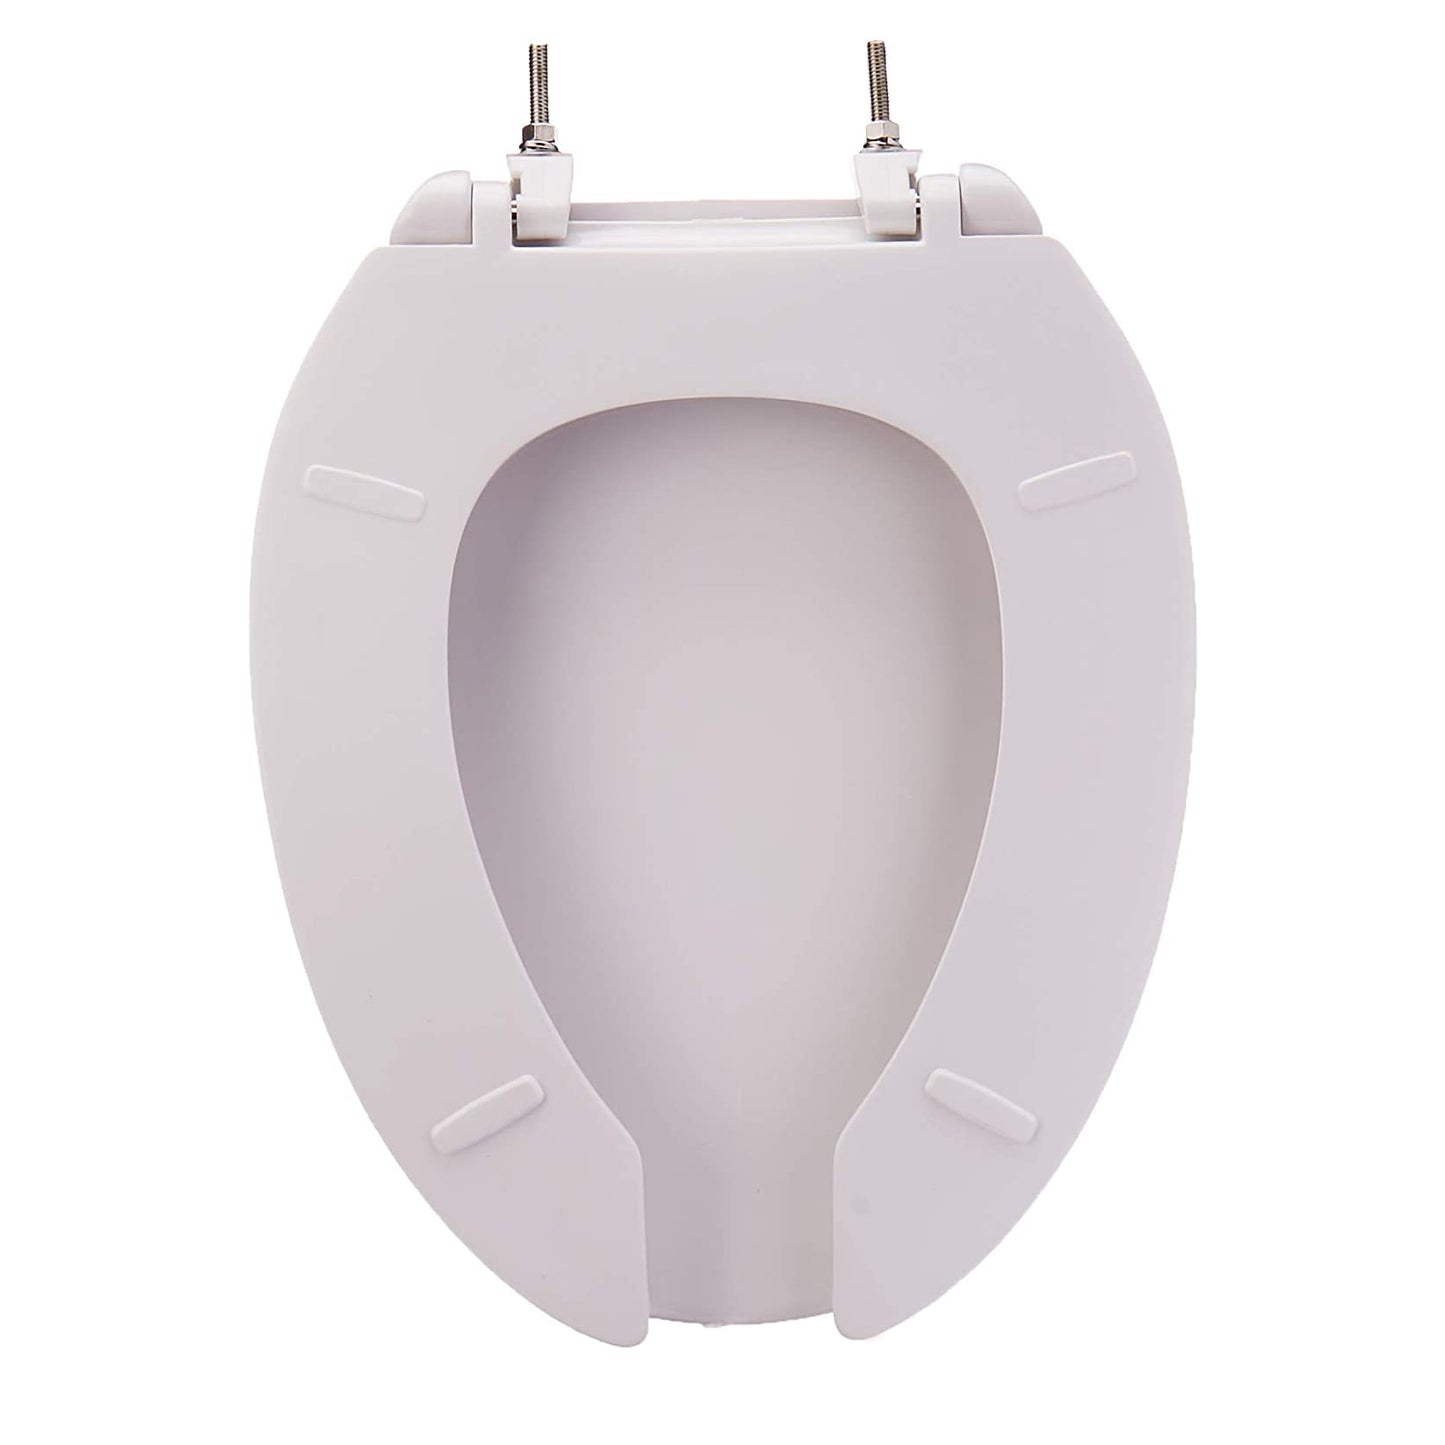 SC134#01 - Elongated Commercial Toilet Seat- Cotton White